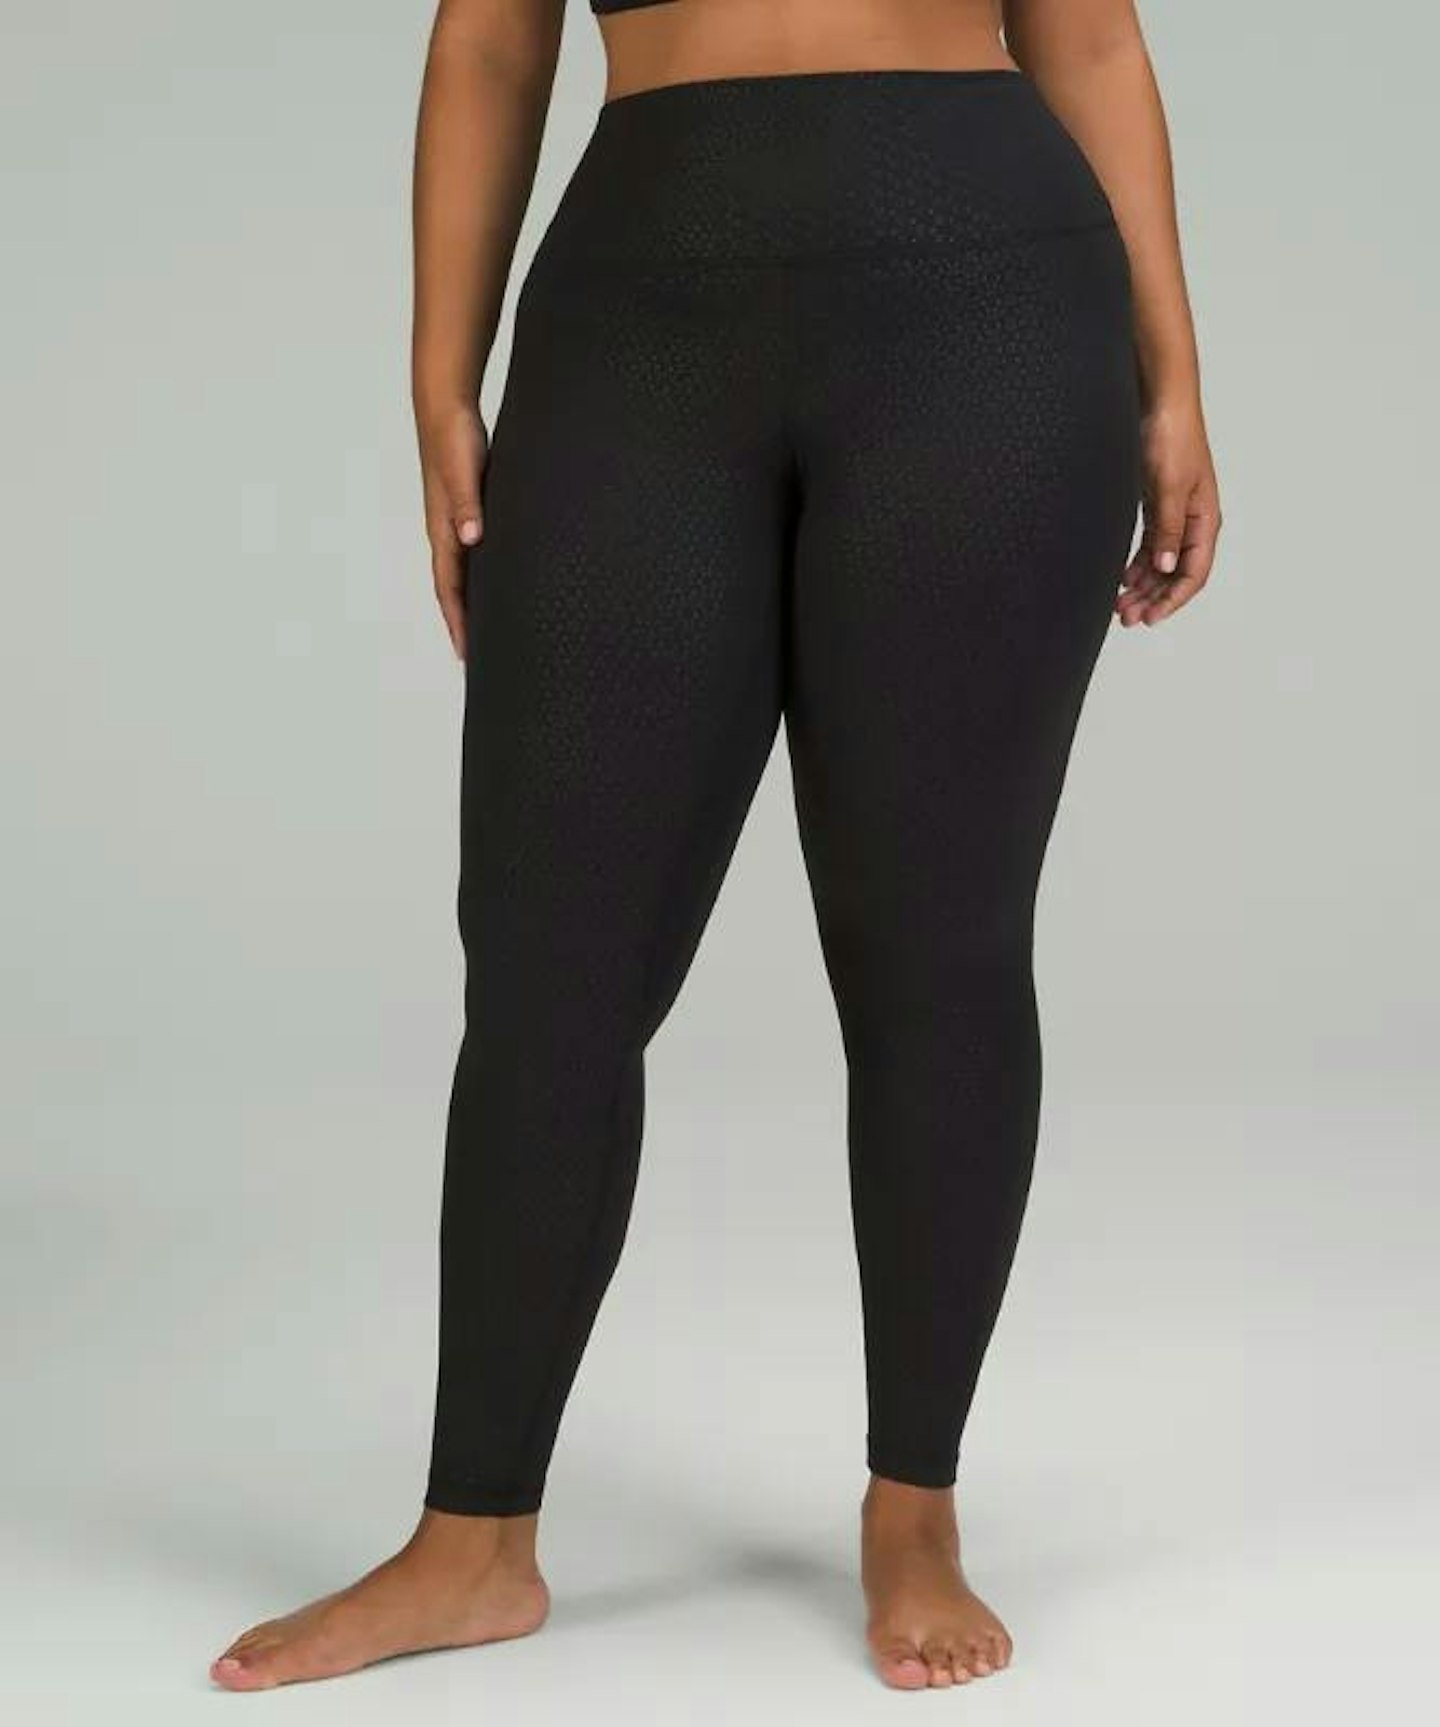 GIMDUMASA Leggings for Women Gym Yoga Pants with Pockets High Waist Workout Running  Sports Activewear Fitness UK